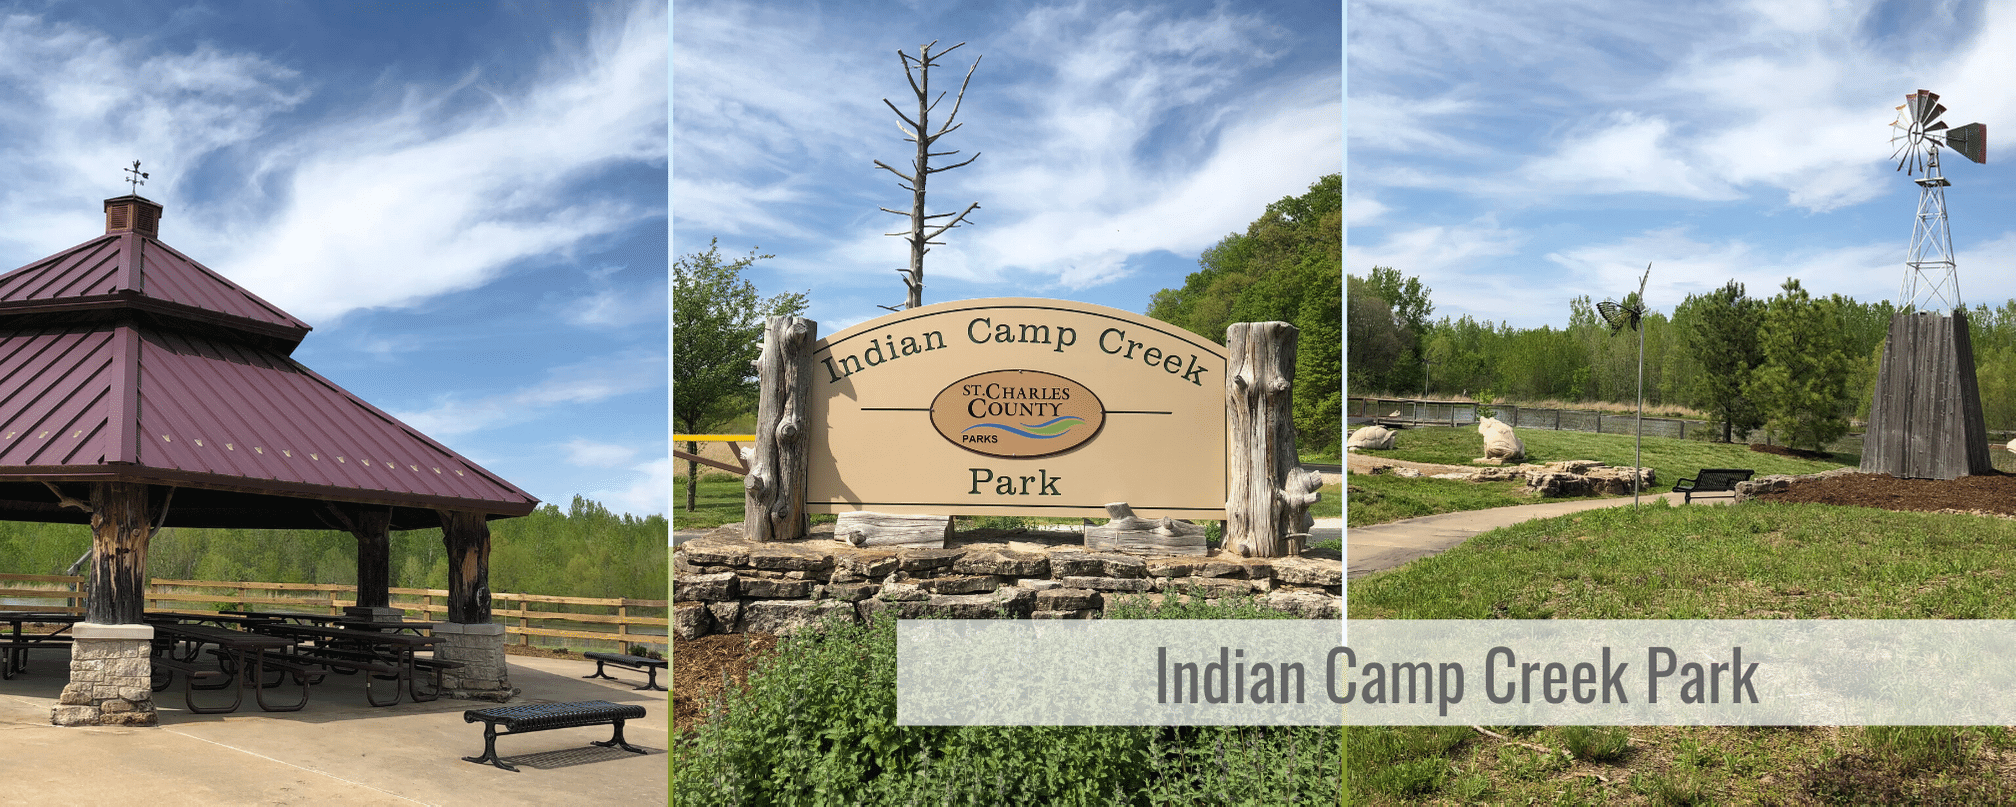 Indian Camp Creek Park Foristell